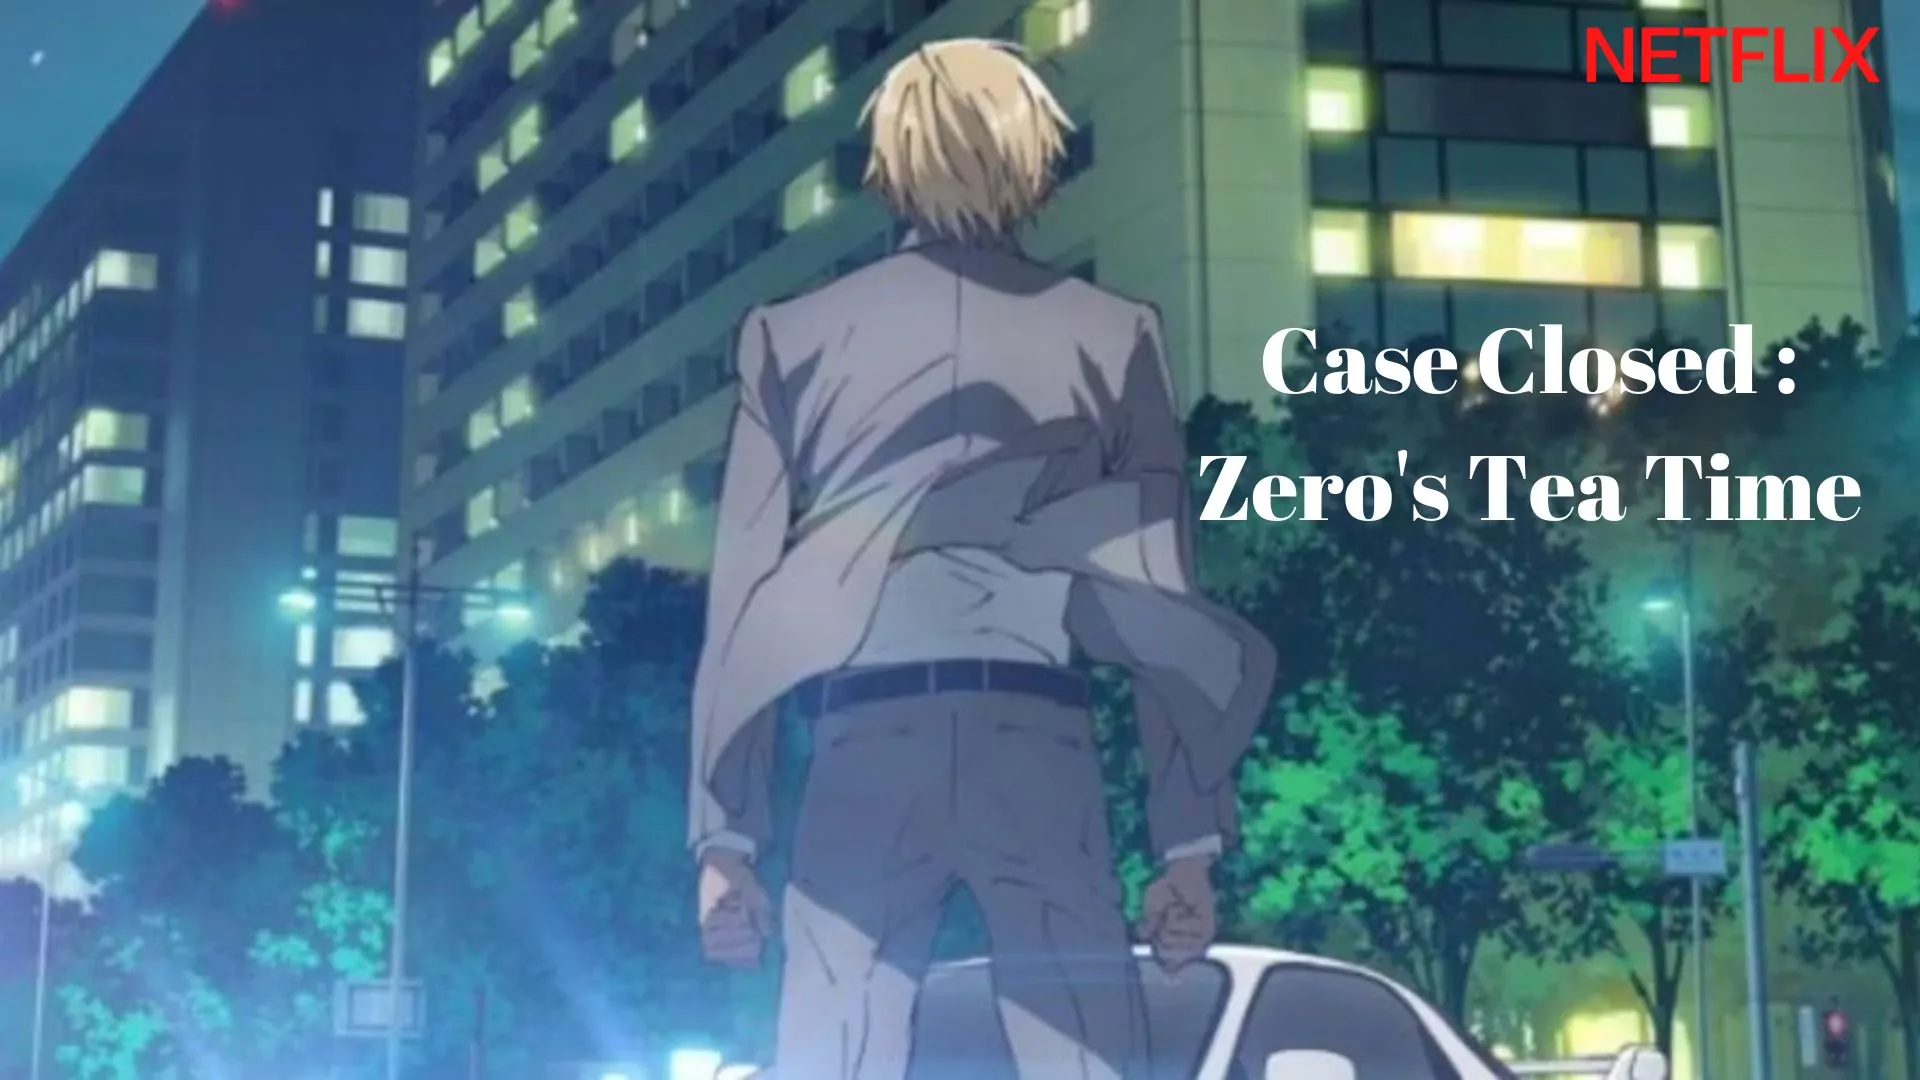 Case Closed Zero's Tea Time Wallpaper And Image (1)